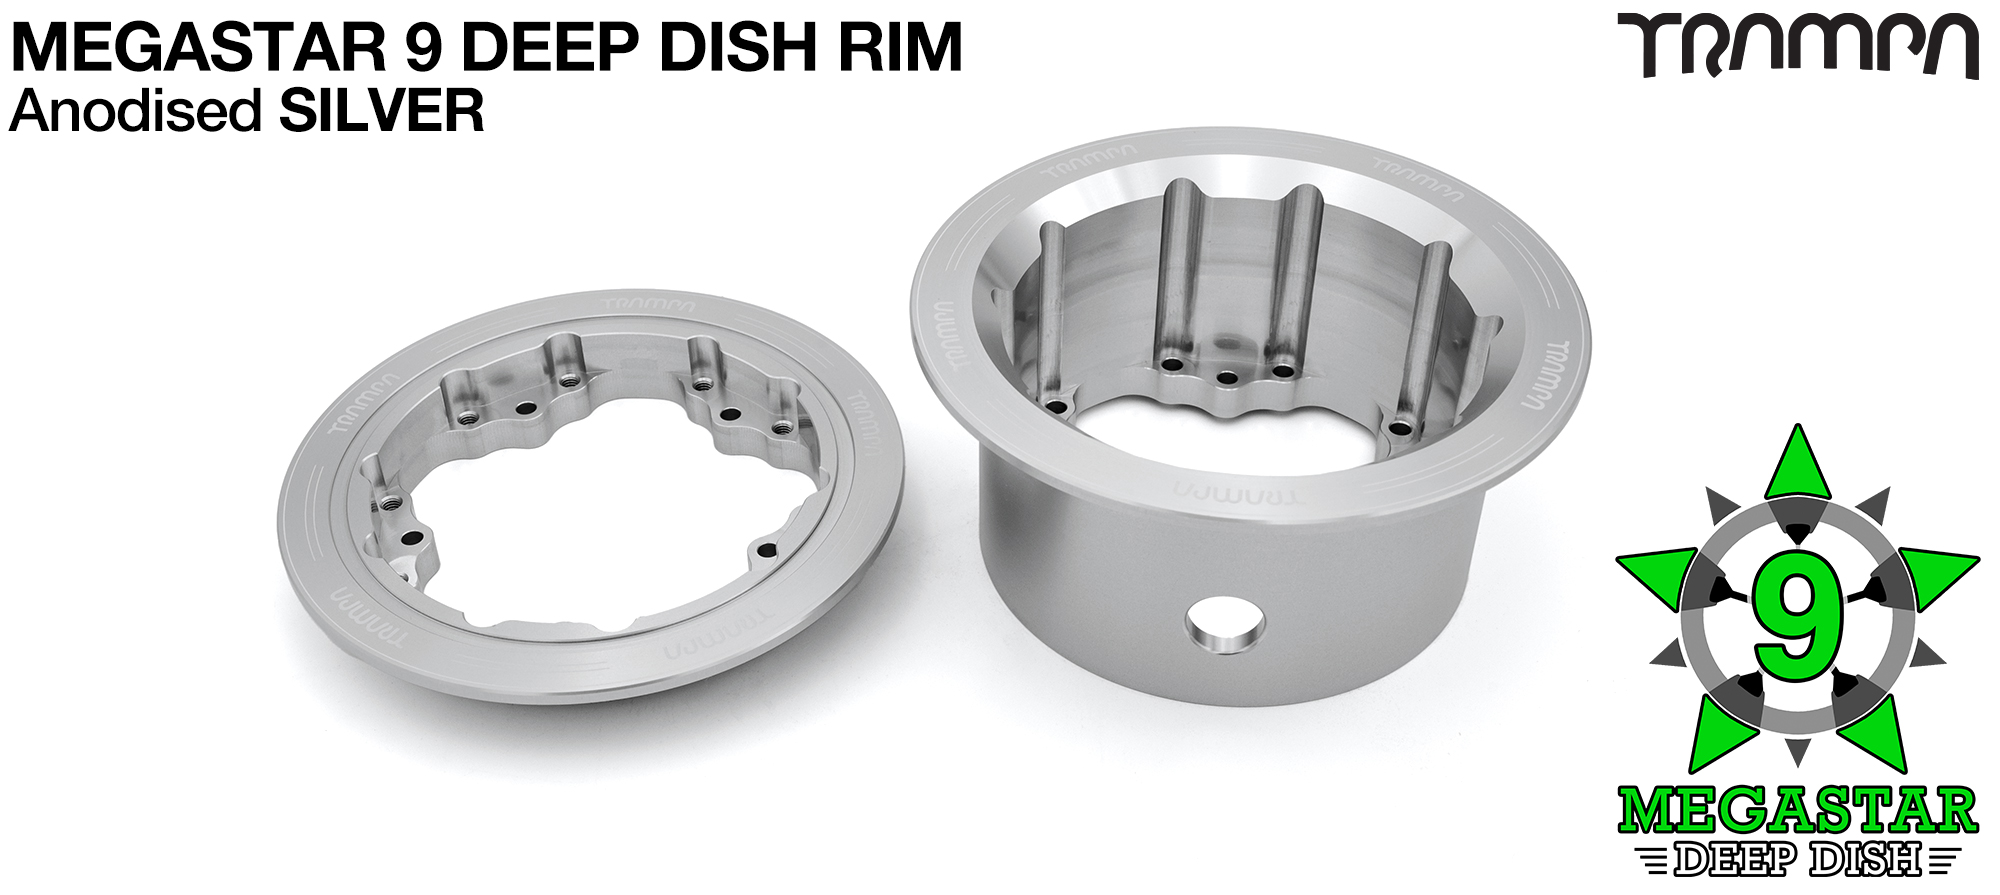 3.75/4x 3 inch DEEP-DISH MEGASTAR 9 Rims - SILVER 